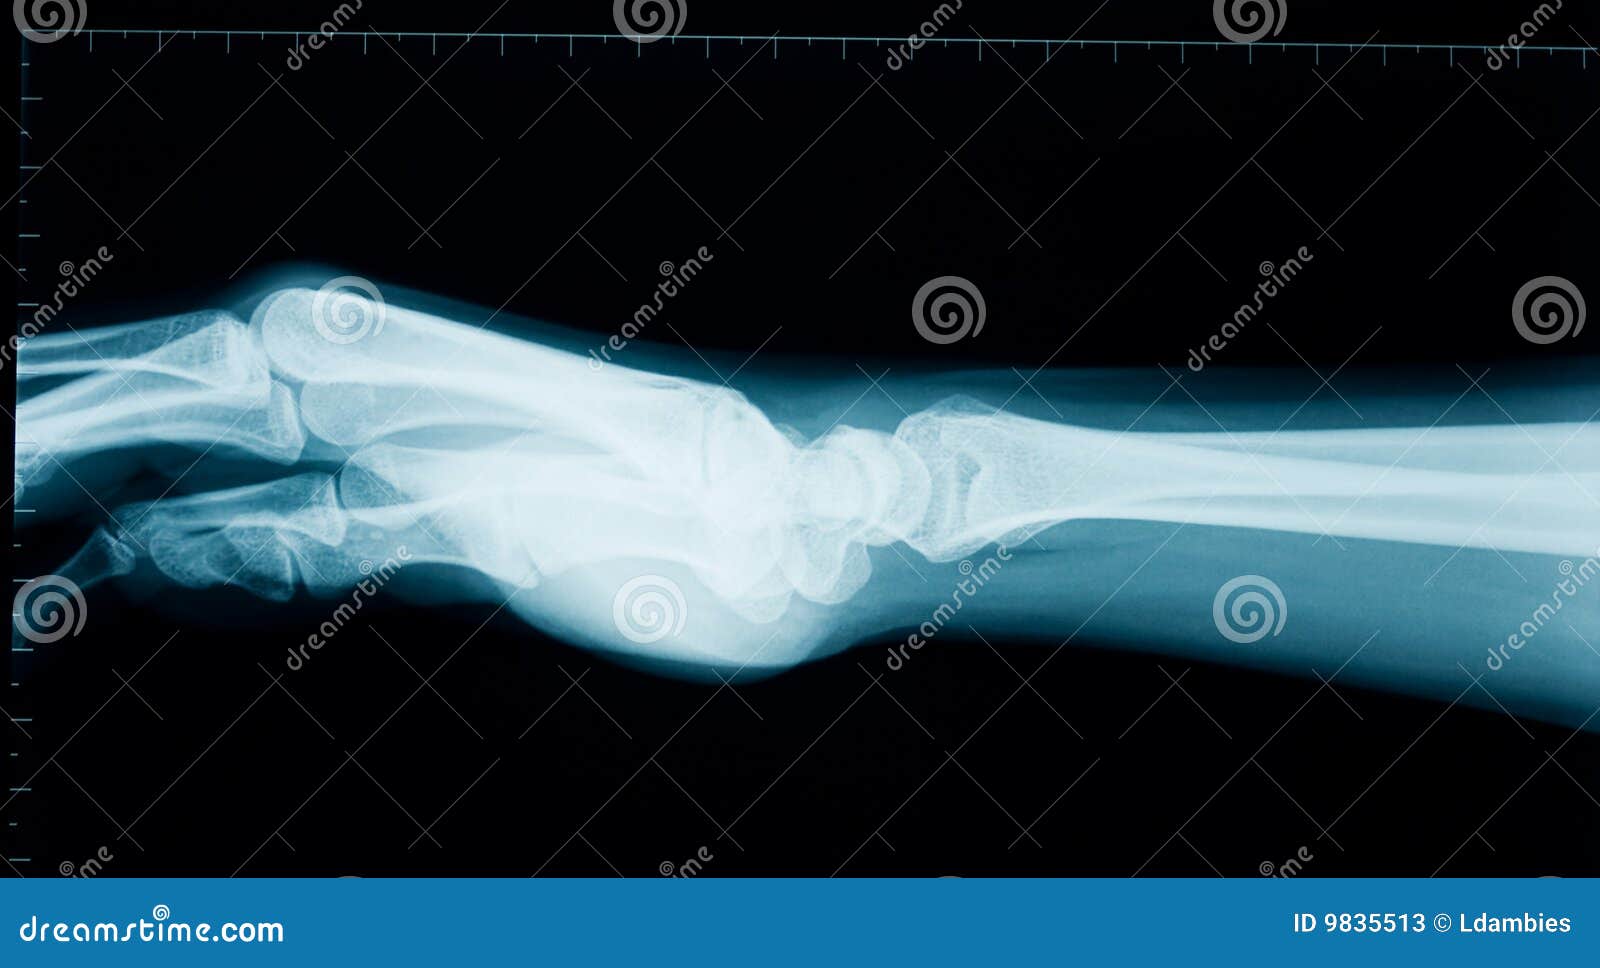 hand wrist x-ray